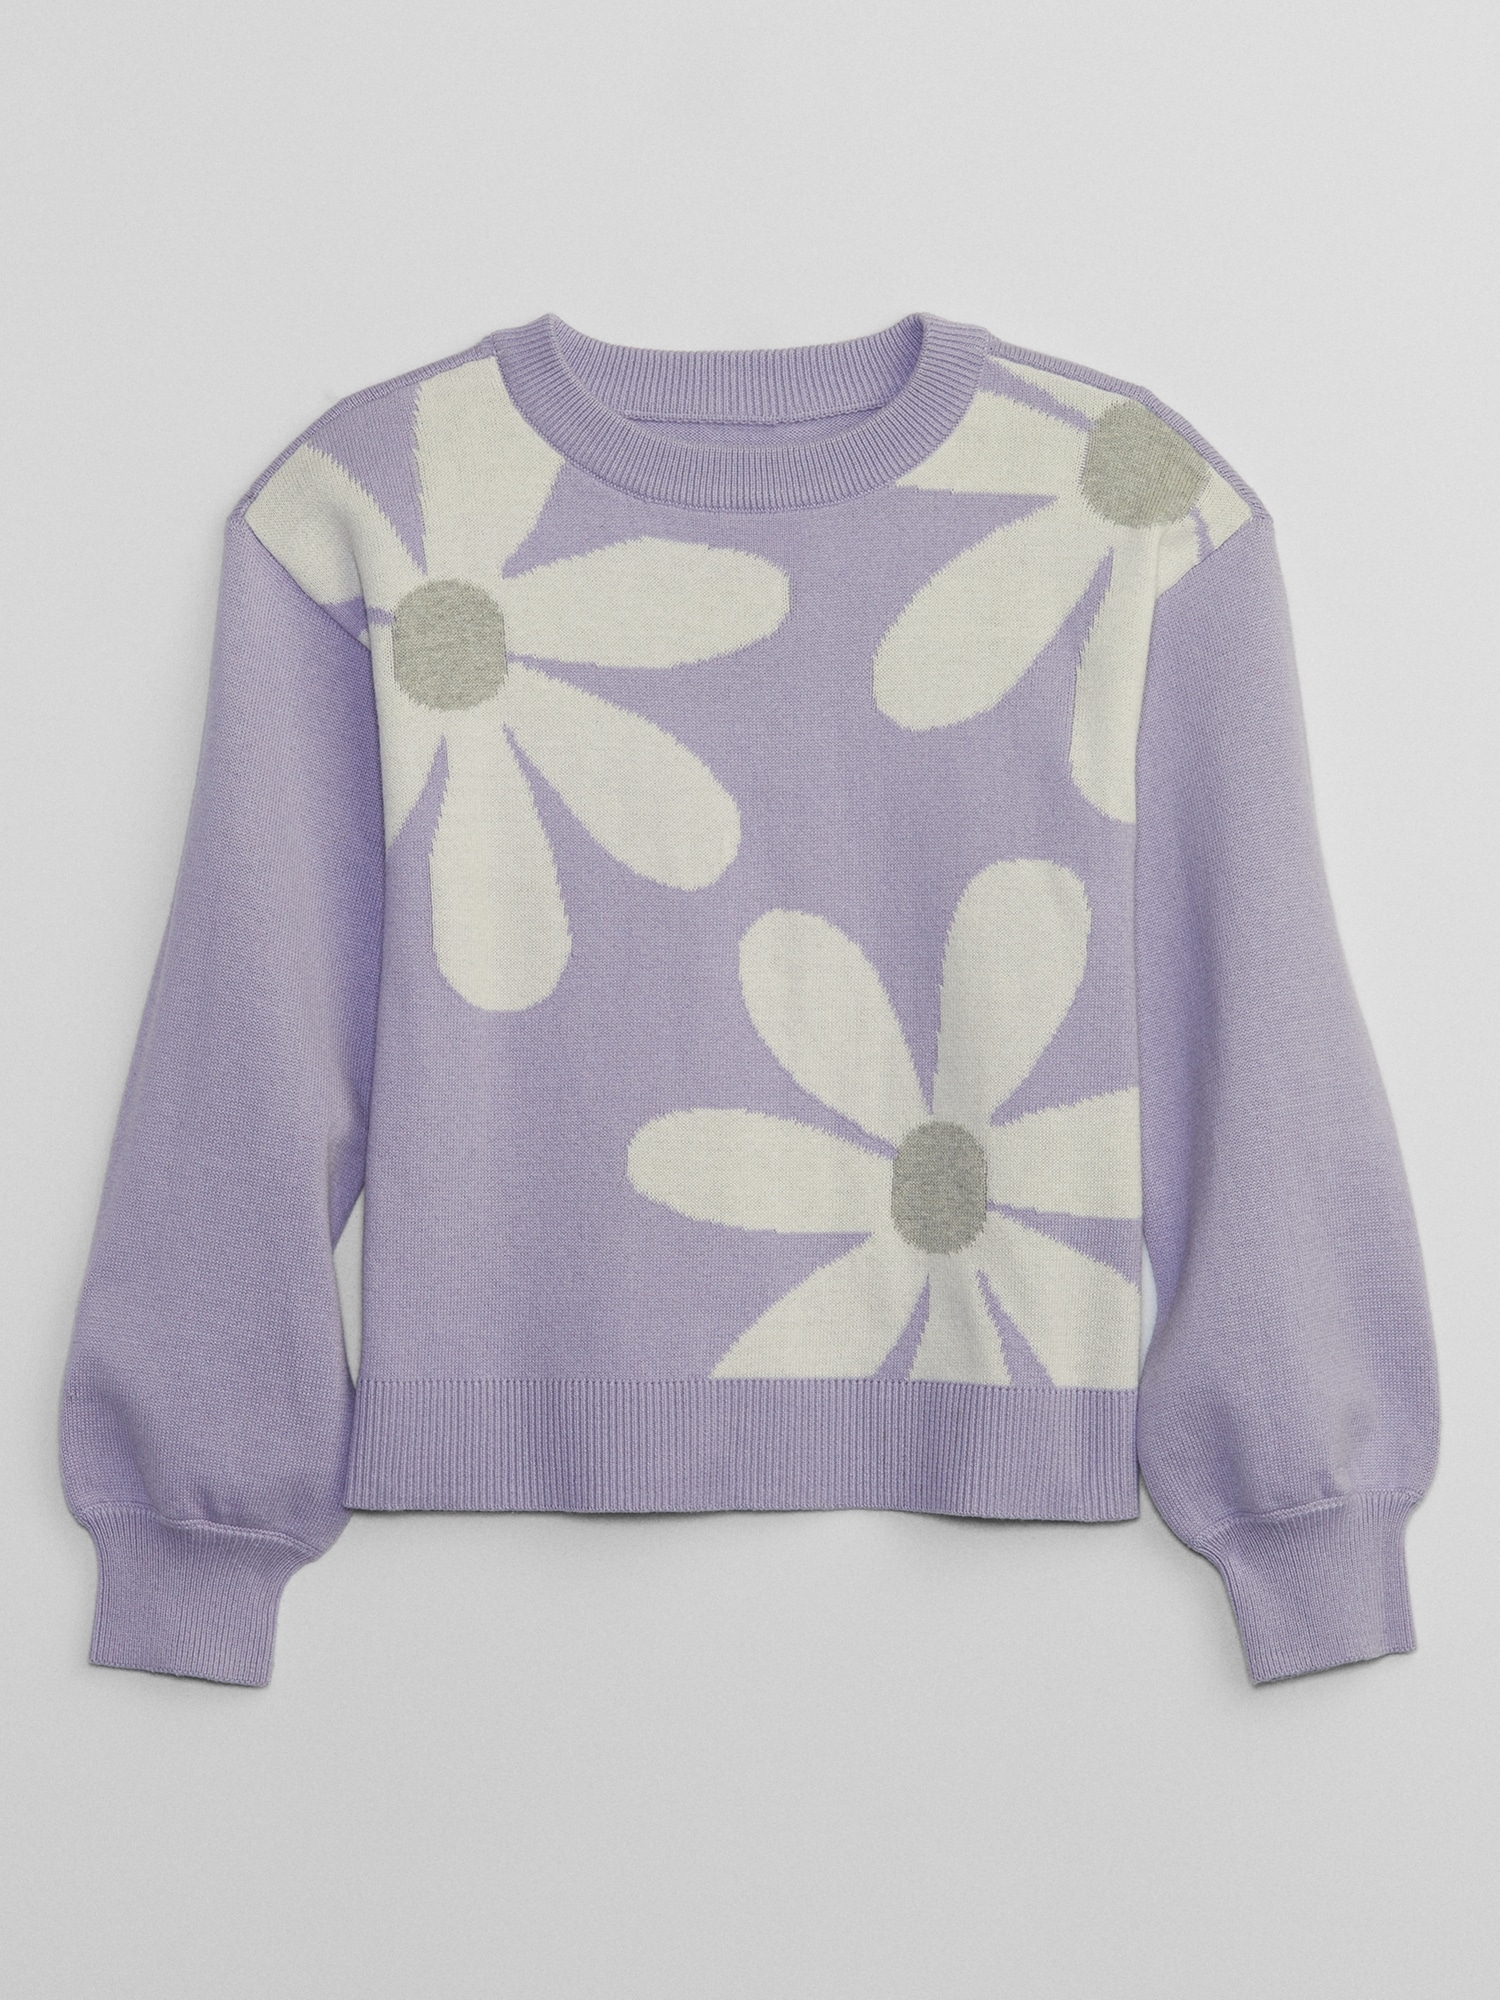 Kids Print Itarsia Sweater | Gap Factory